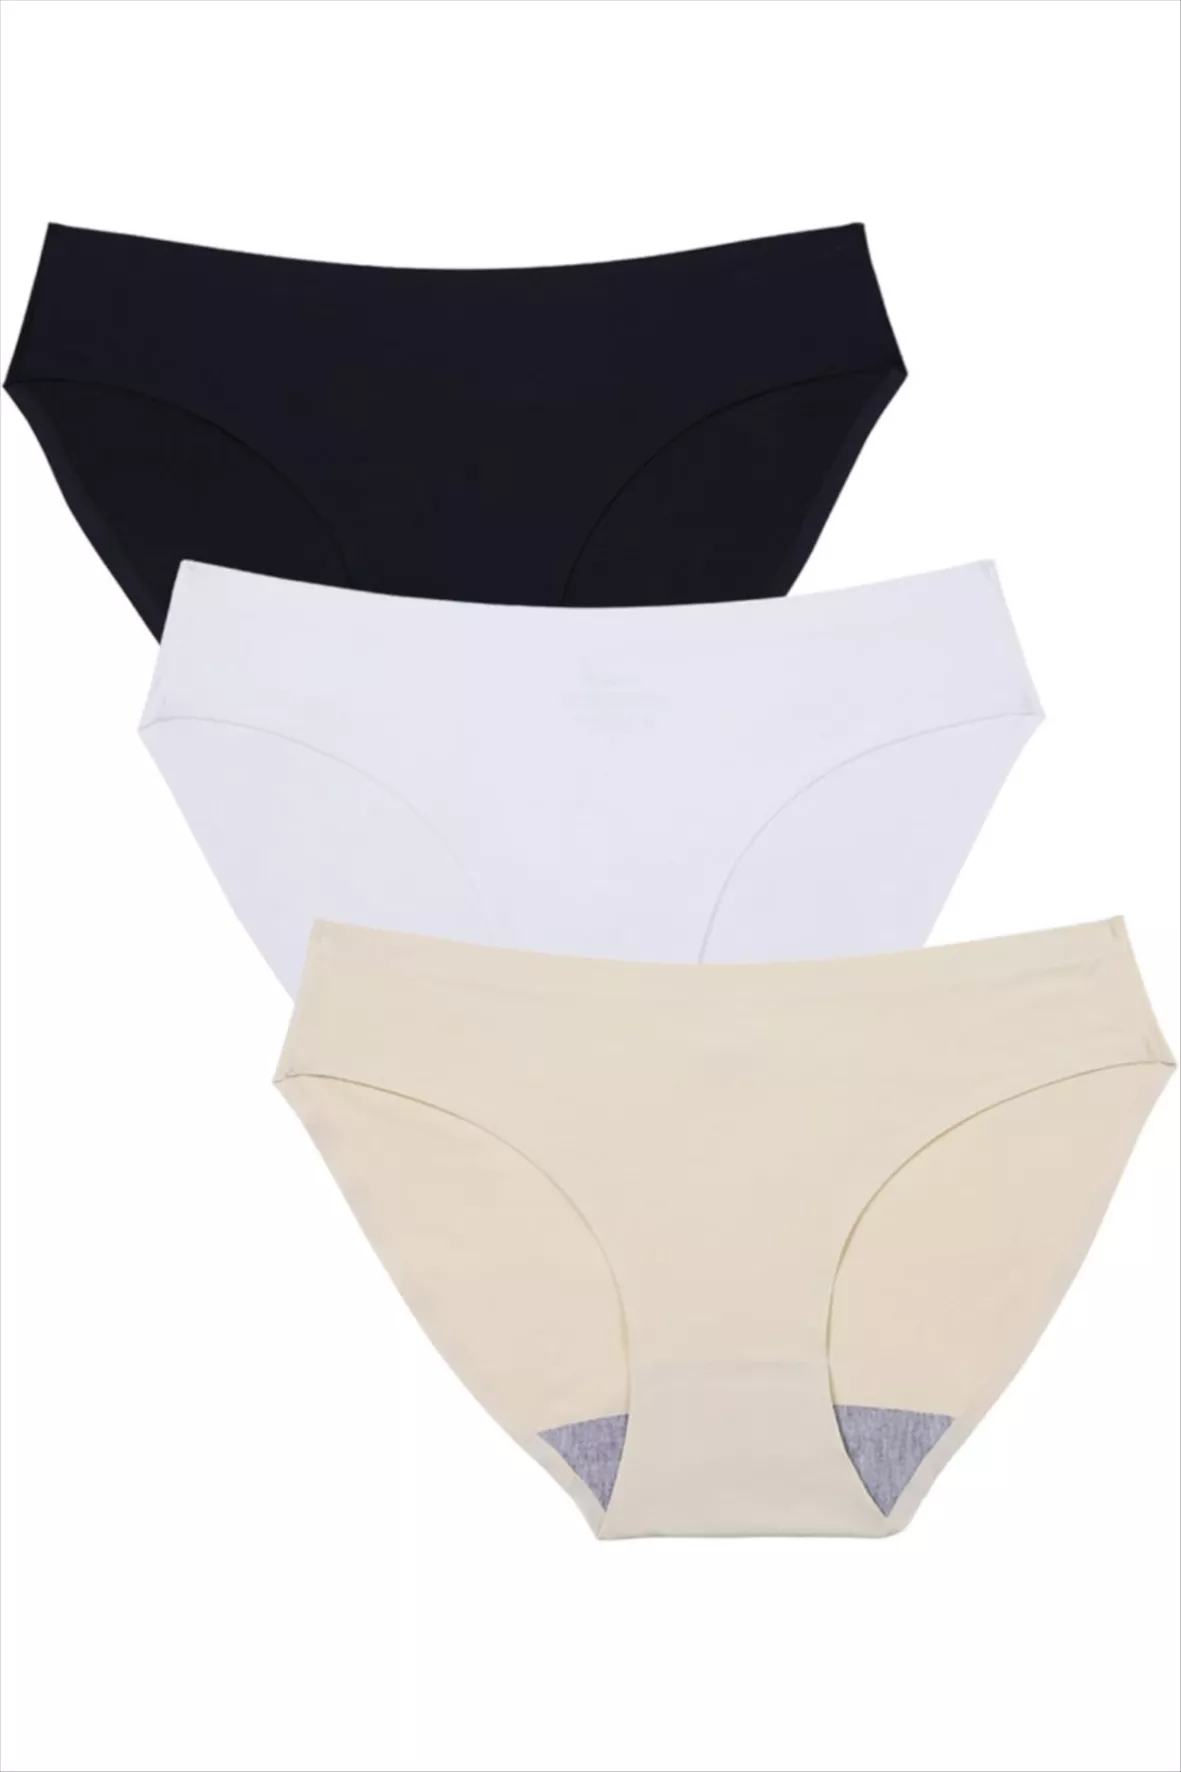 Wealurre Seamless Underwear Invisible Bikini No Show Nylon Spandex Women  Panties - black - S : : Fashion